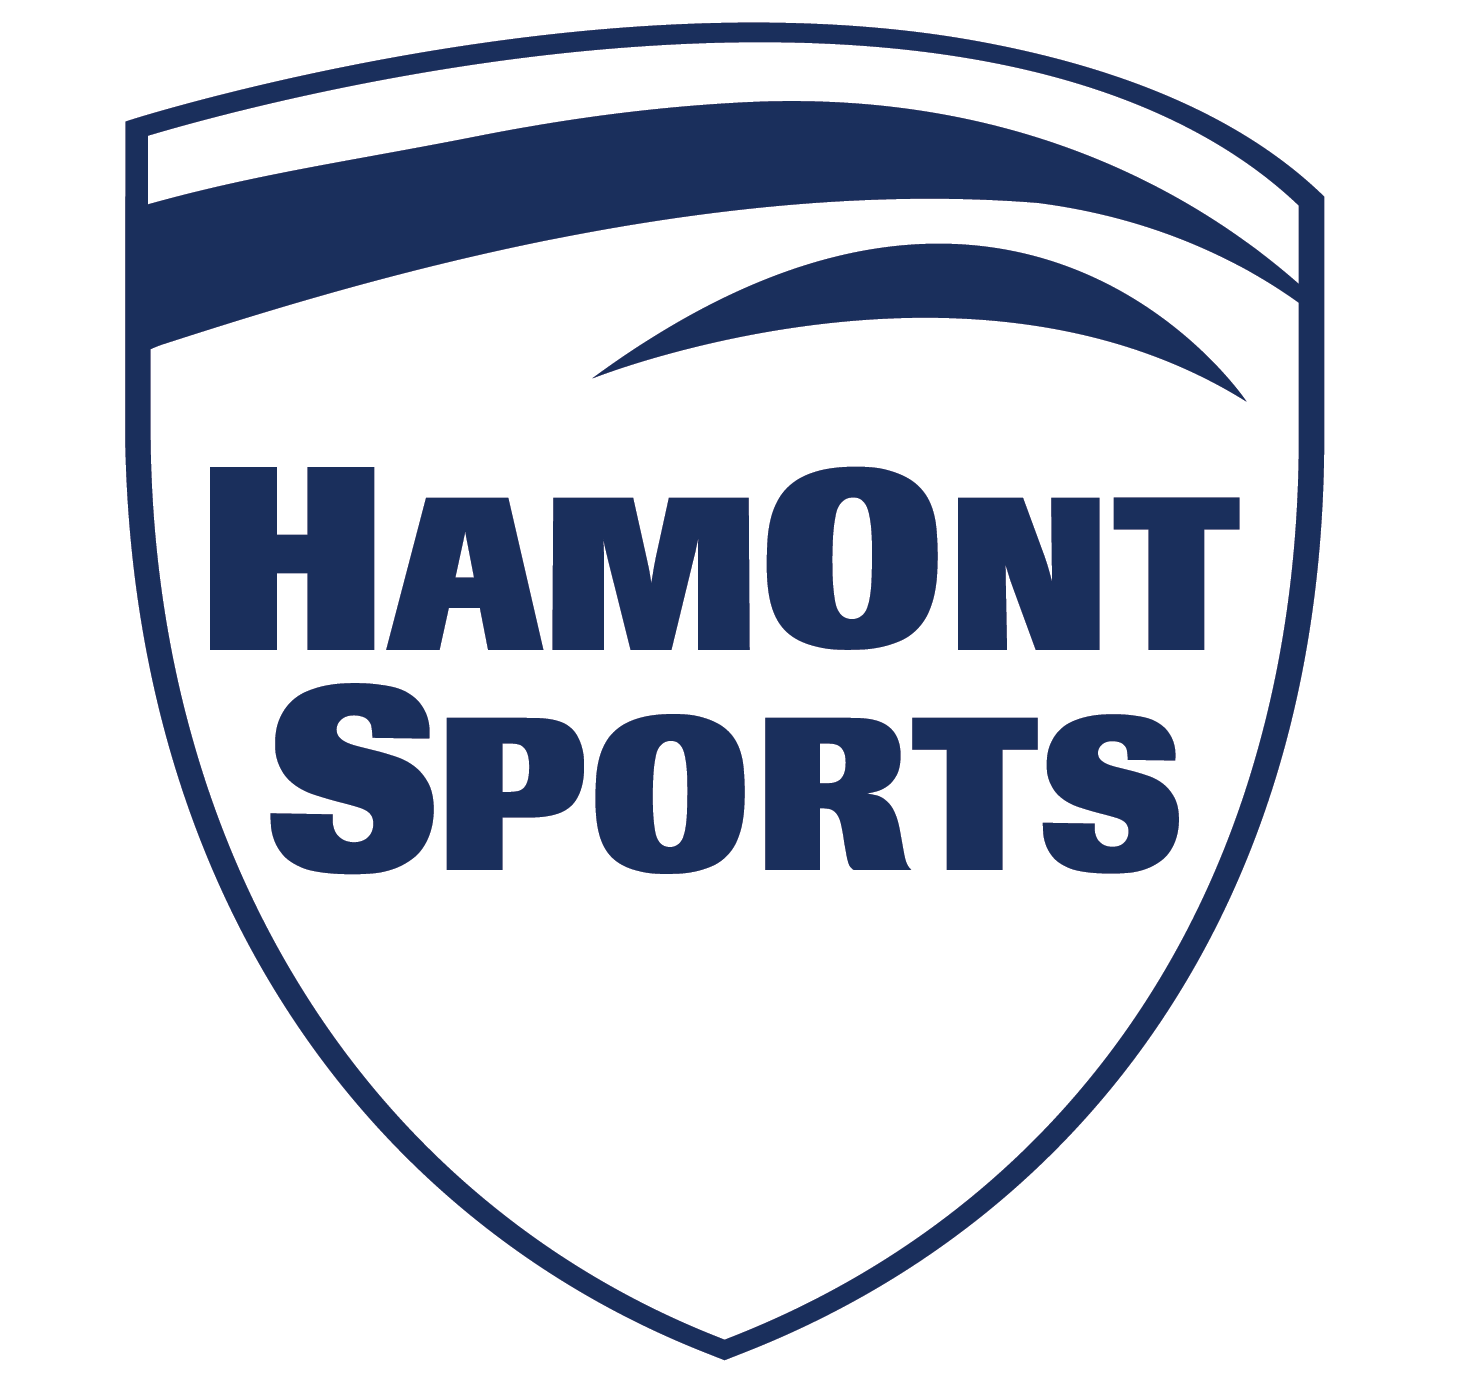 HamOnt Sports